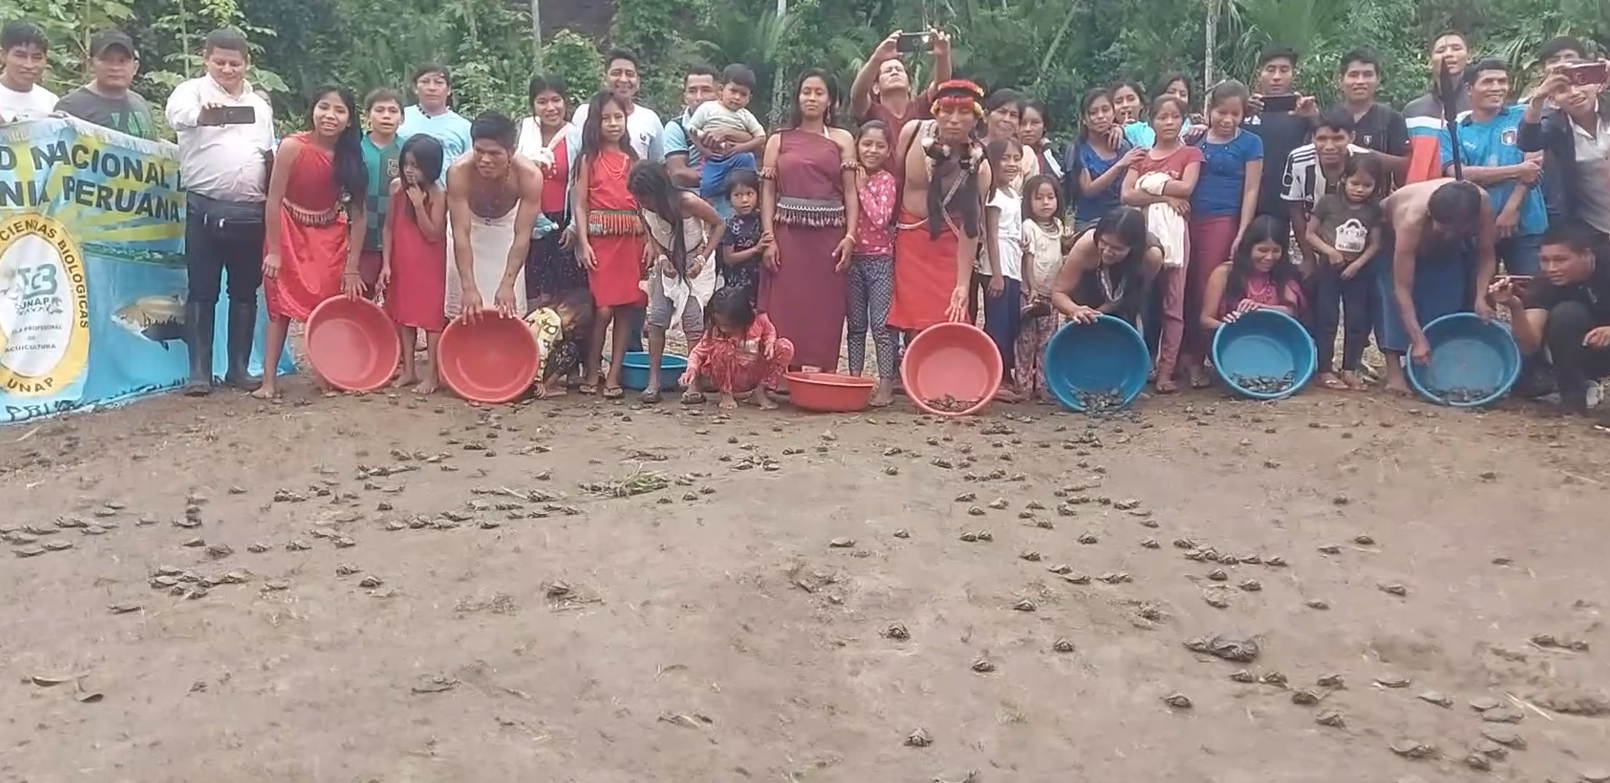 Community Video: Release of Aquatic Turtles in the Kankiam Basin, Morona, territory of Wampis Nation